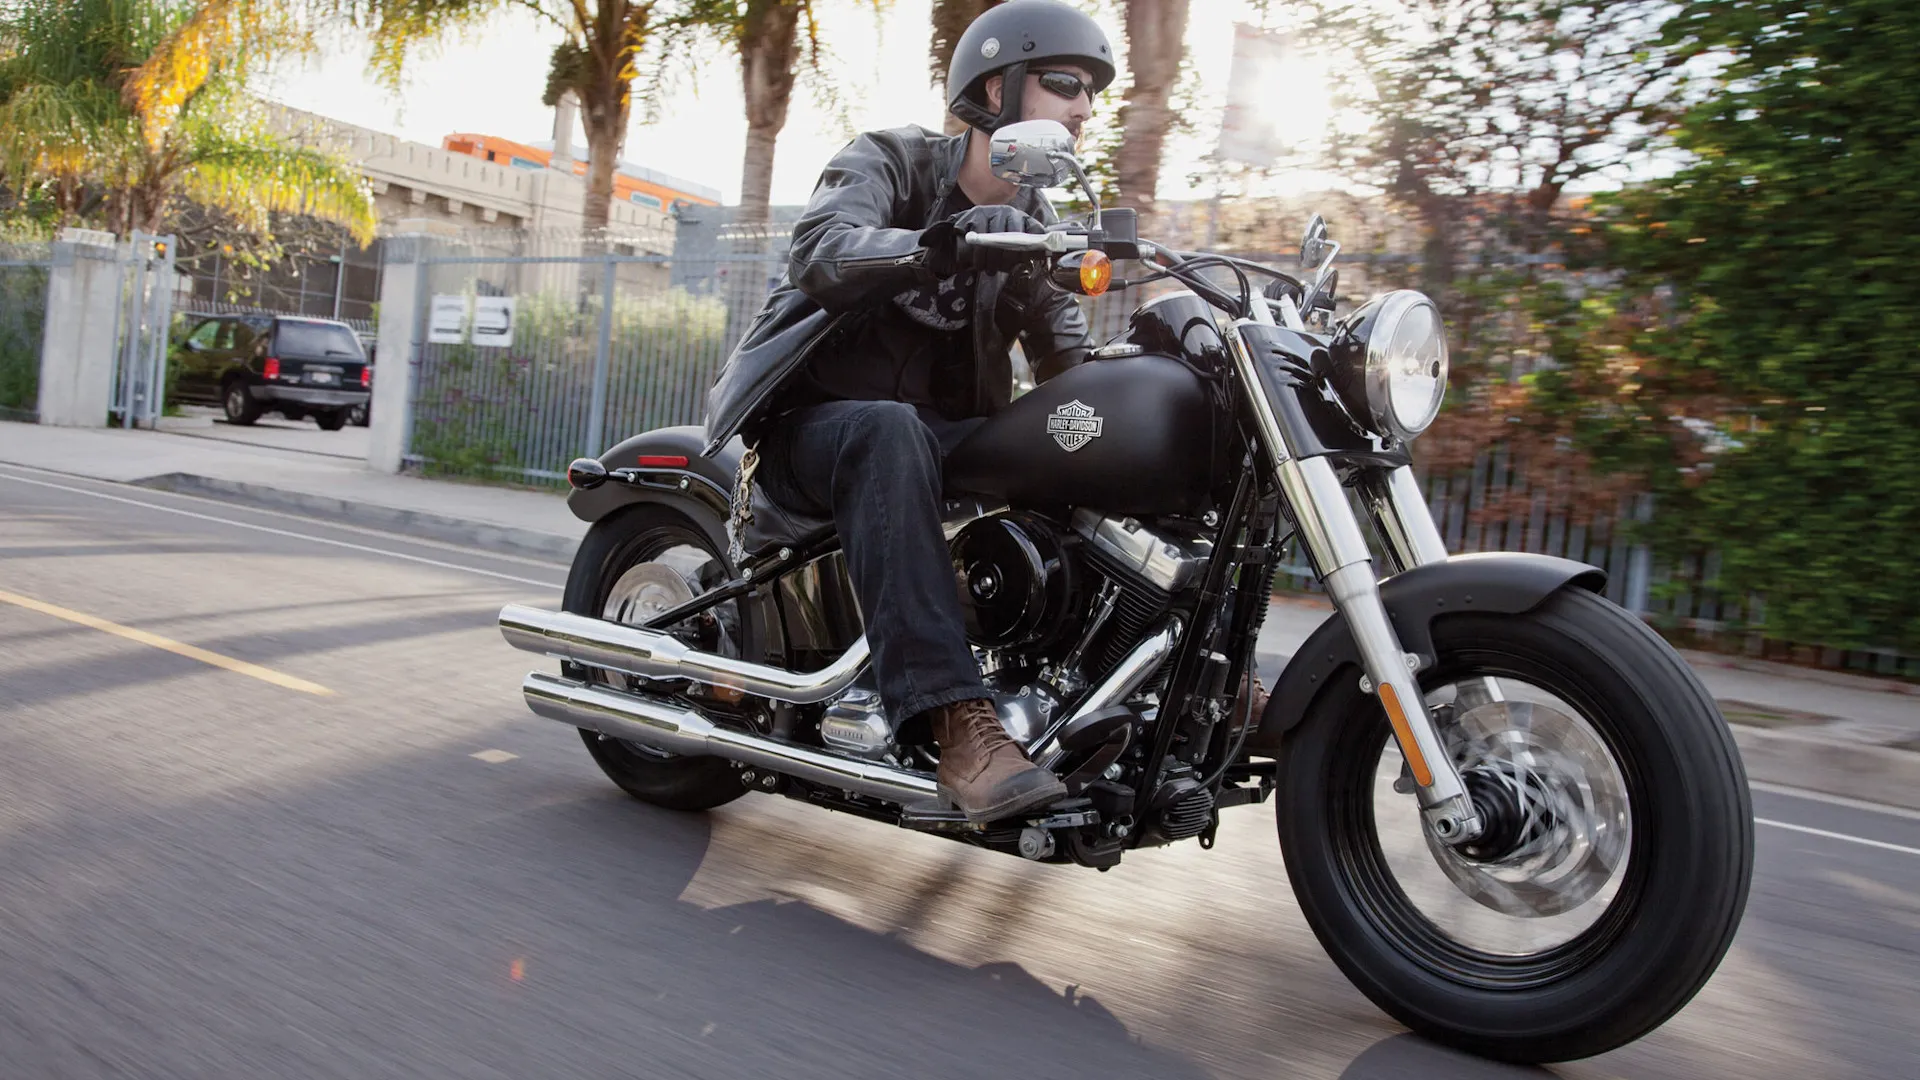 Moto del día: Harley-Davidson Softail Slim (2011)